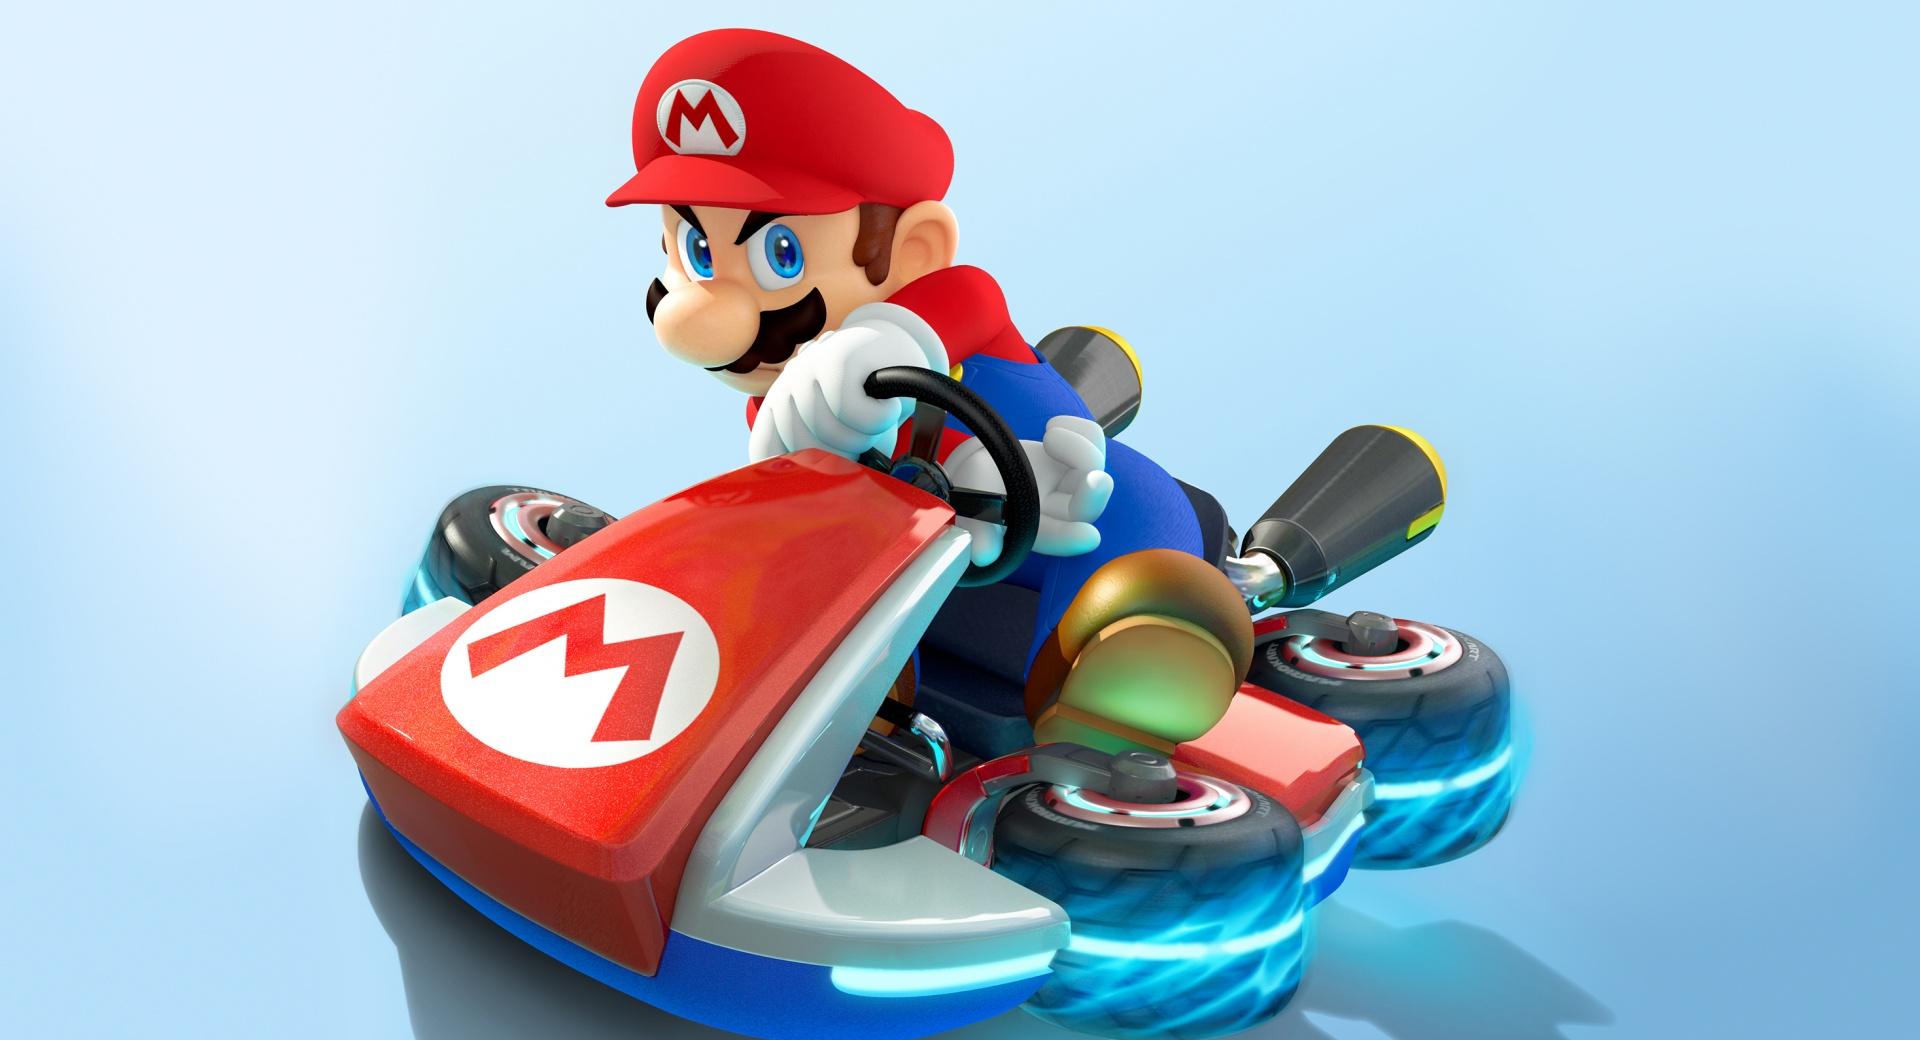 Mario Kart 8 - Mario at 2048 x 2048 iPad size wallpapers HD quality